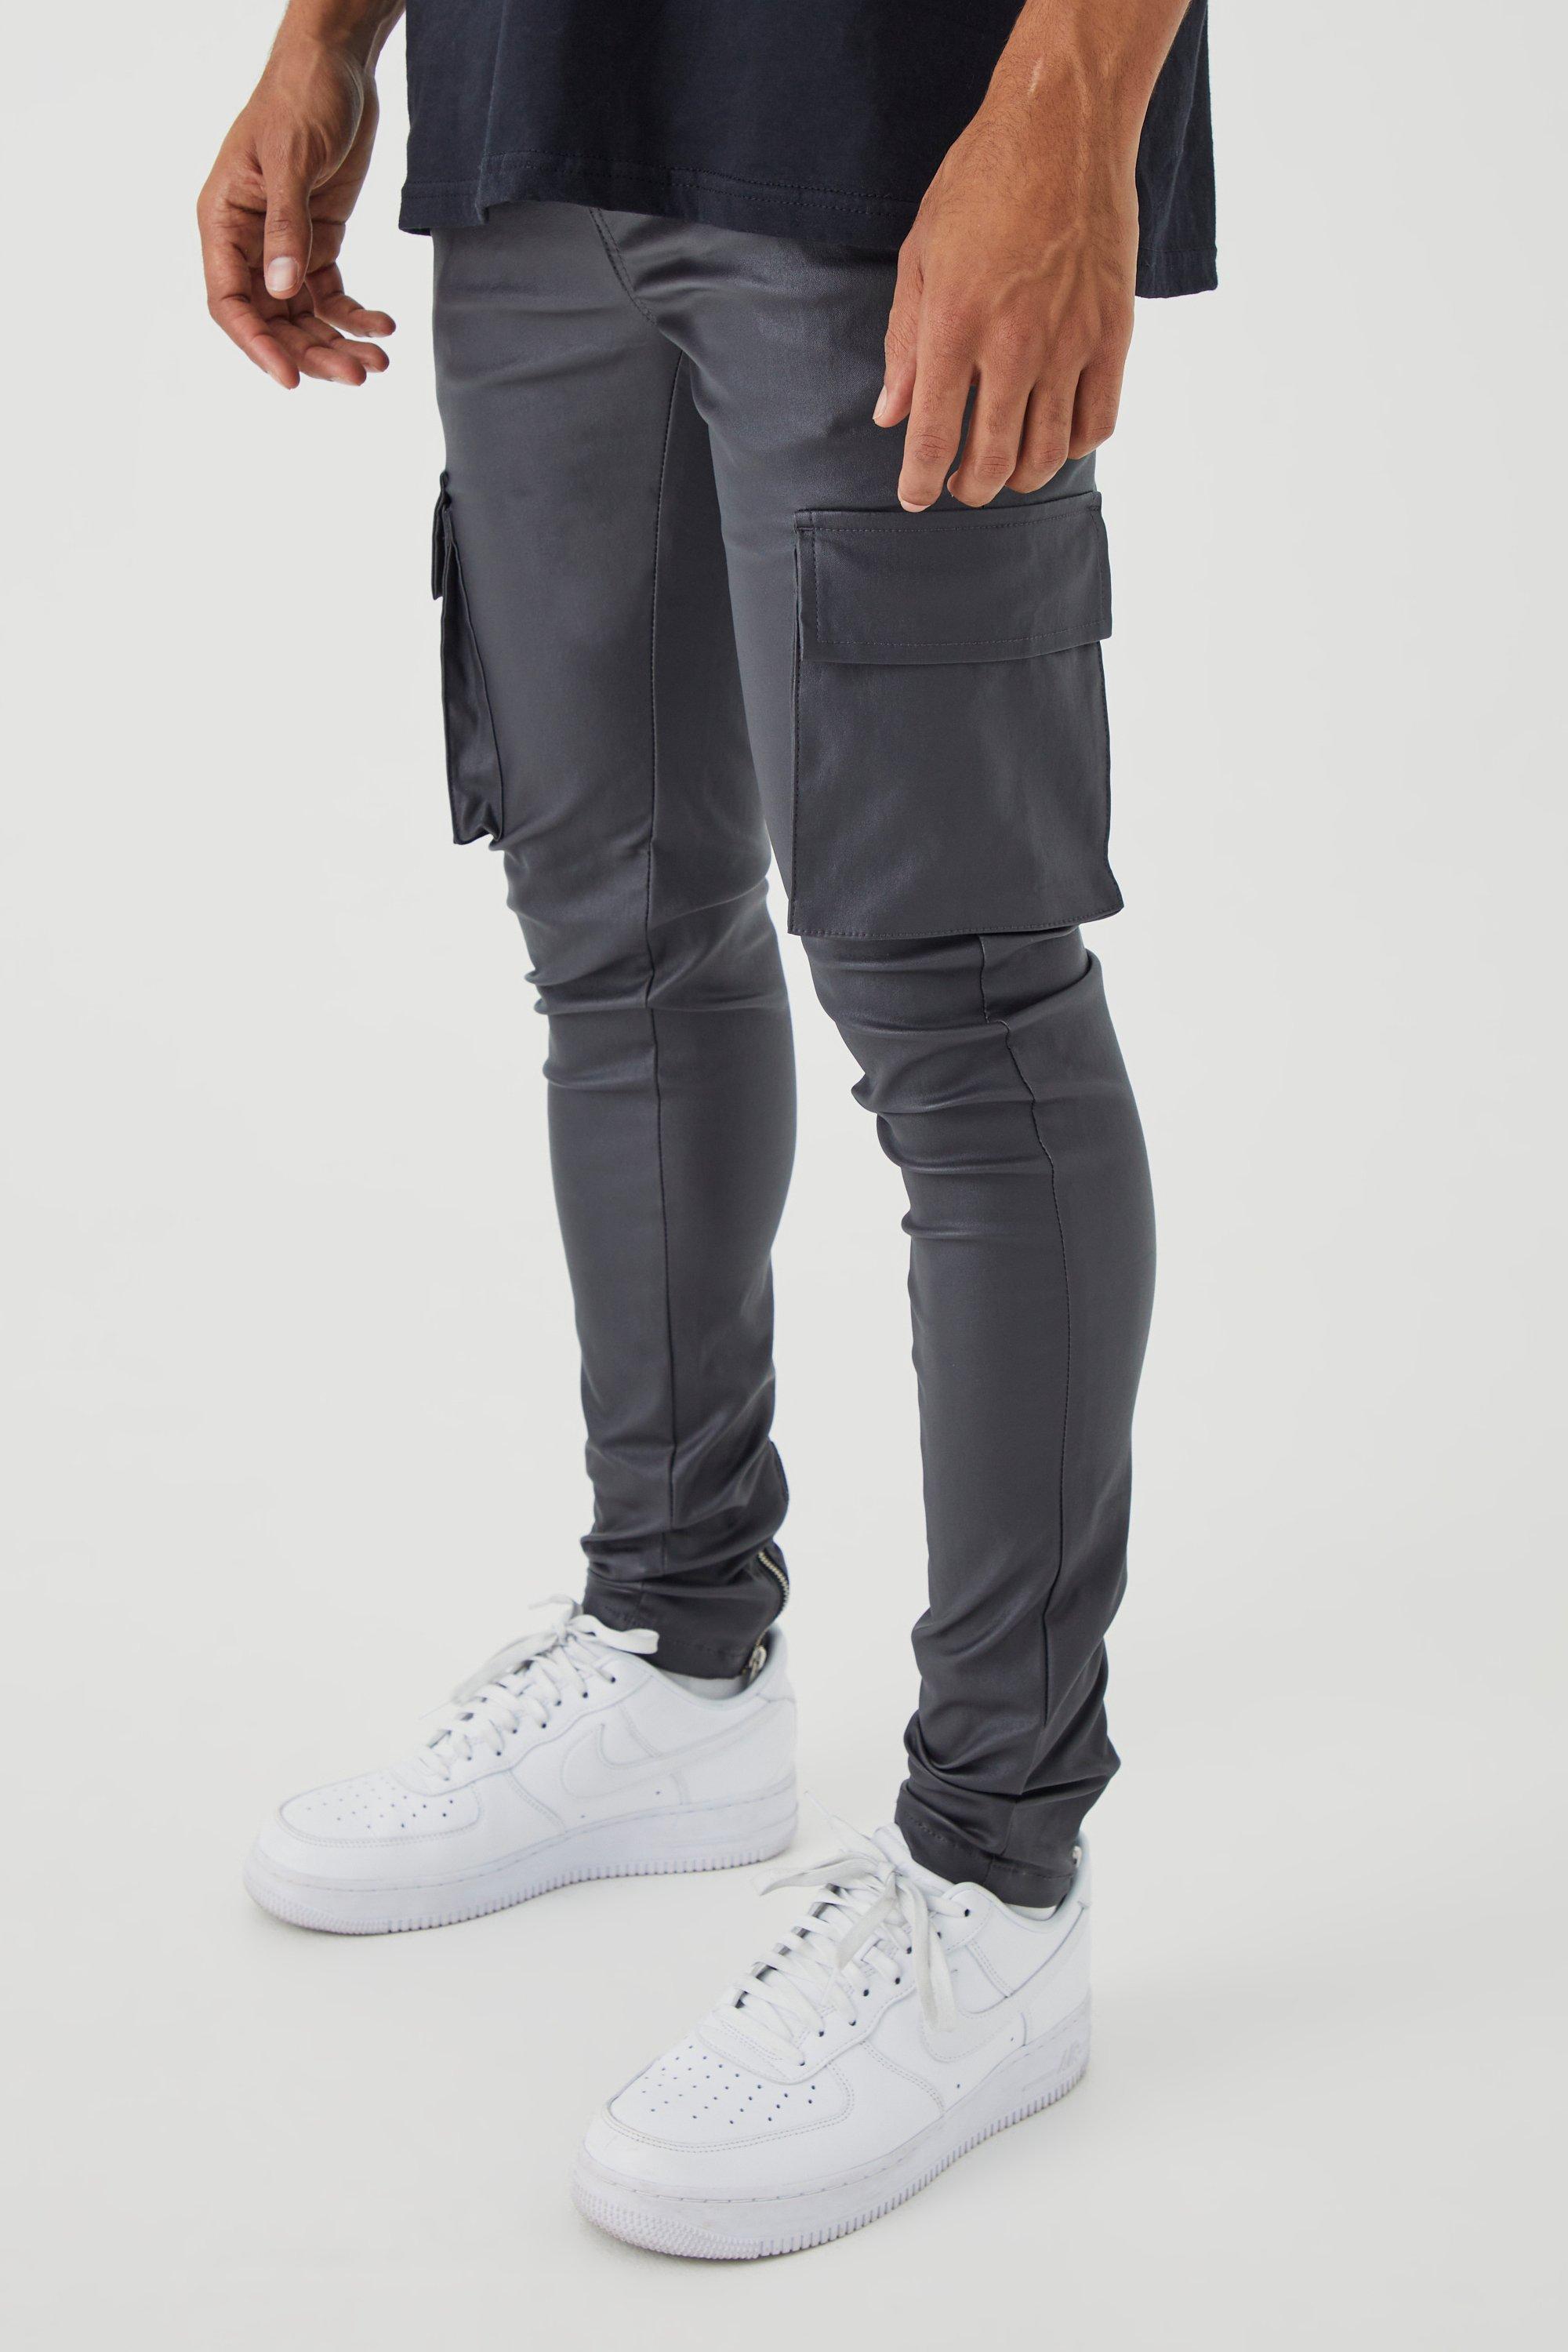 pantalon cargo skinny homme - gris - 30, gris